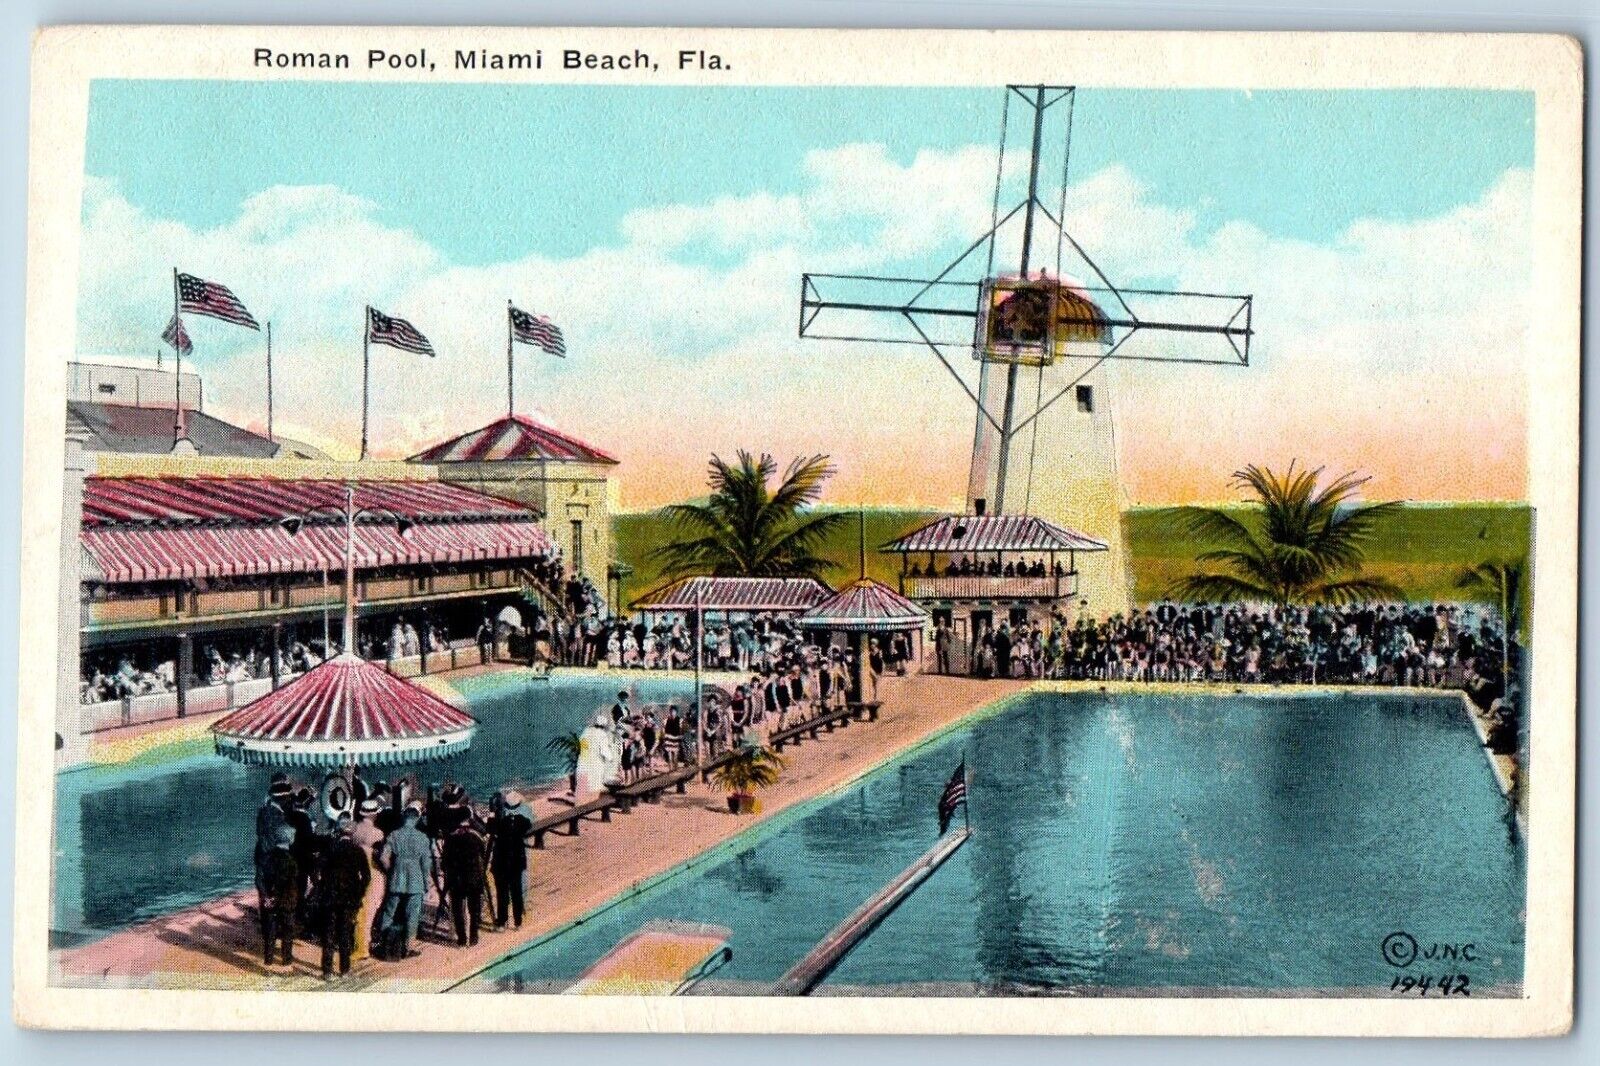 Miami Beach Florida Postcard Roman Pool Exterior Building c1940 Vintage Antique